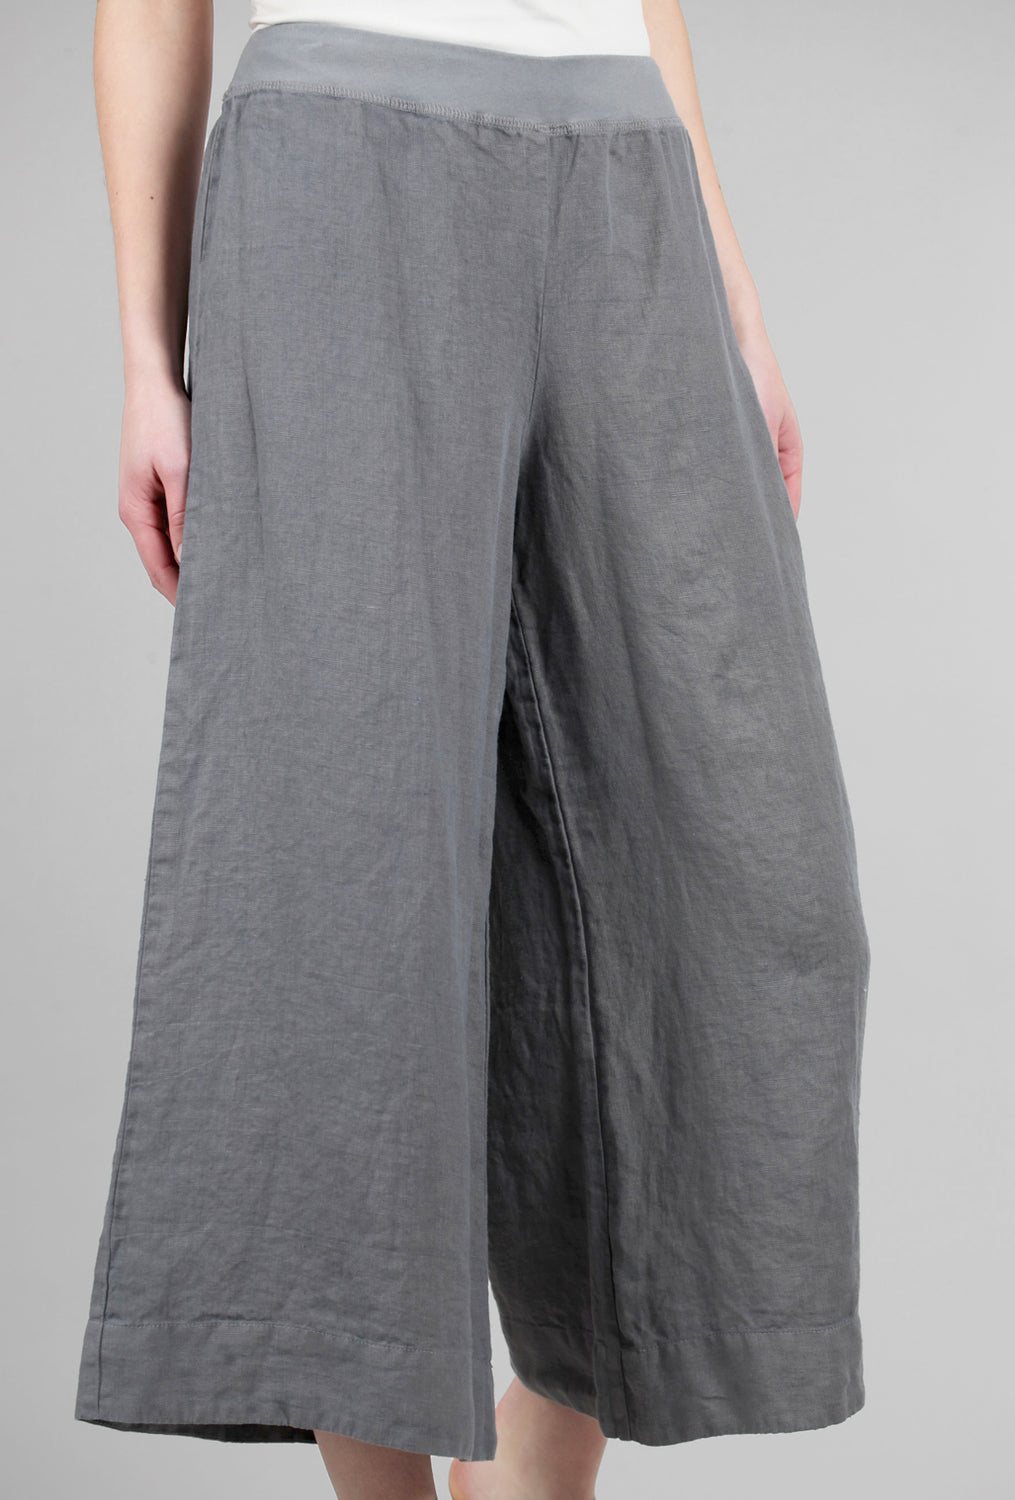 Solid Linen Crop Pant, Cobblestone Gray